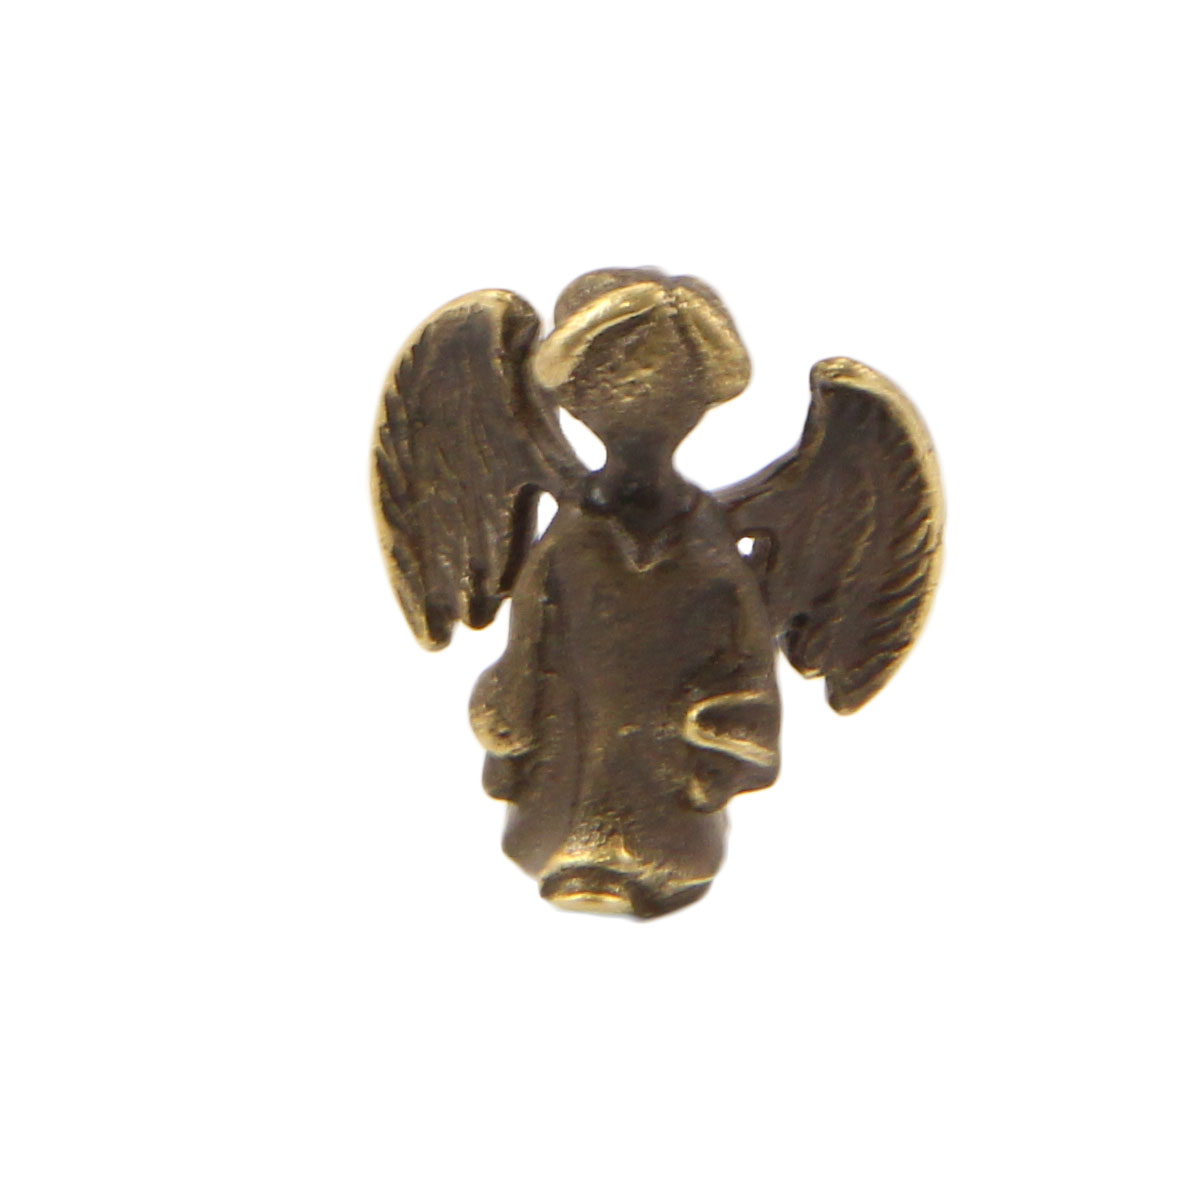 Бронзовый сувенир Ангел безликий малыйФото 15455-07.jpg